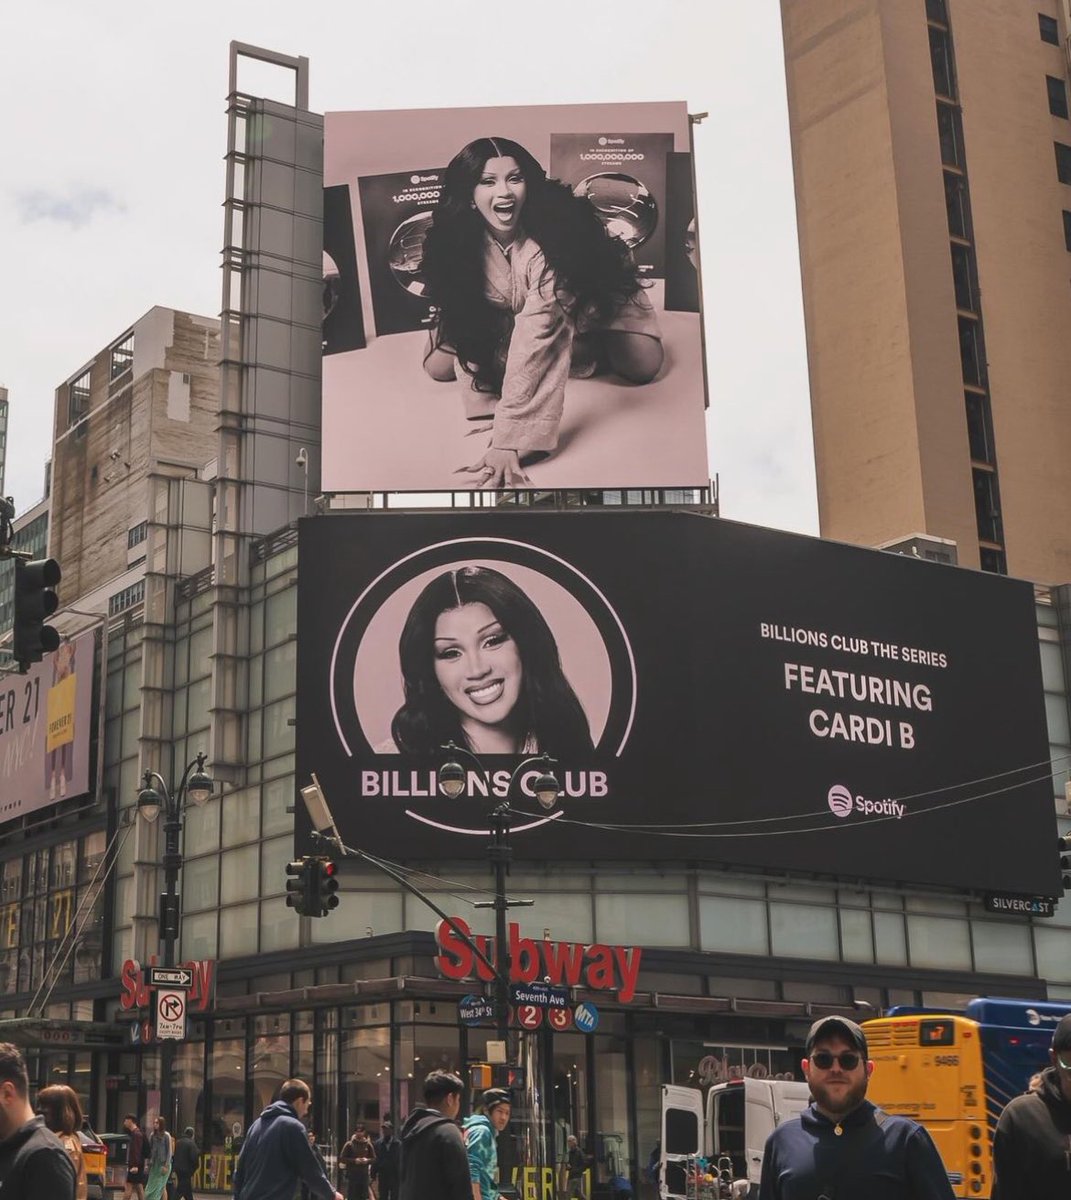 Cardi’s Spotify ‘Billions Club’ billboards in New York City. 🏙️